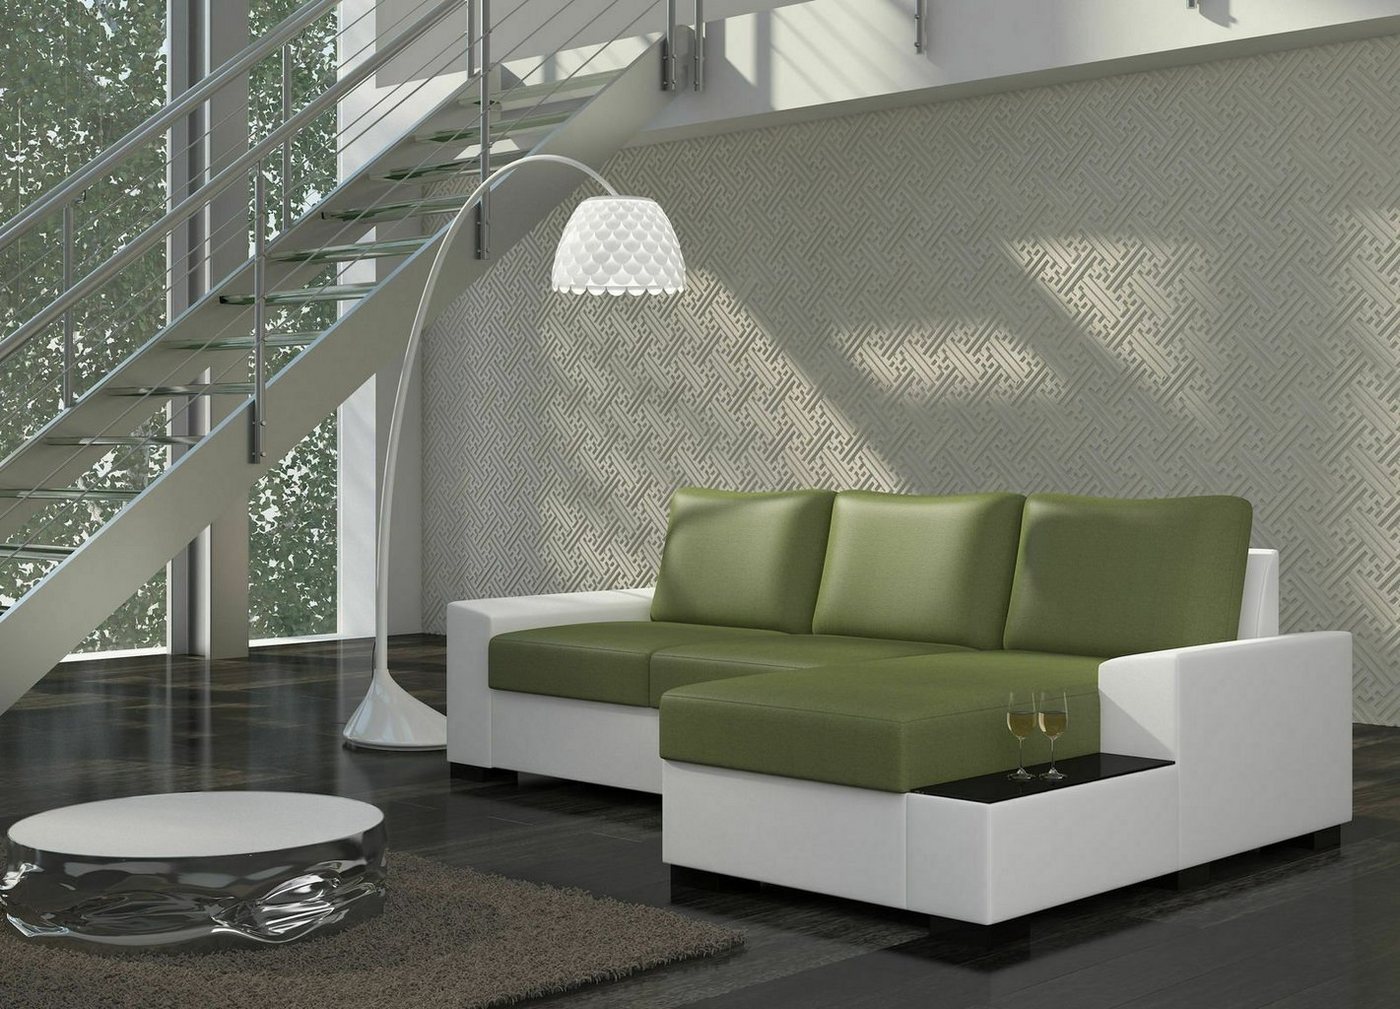 JVmoebel Ecksofa Design Ecksofa Schlafsofa Bettfunktion Sofa Couch Leder Polster, Mit Bettfunktion von JVmoebel